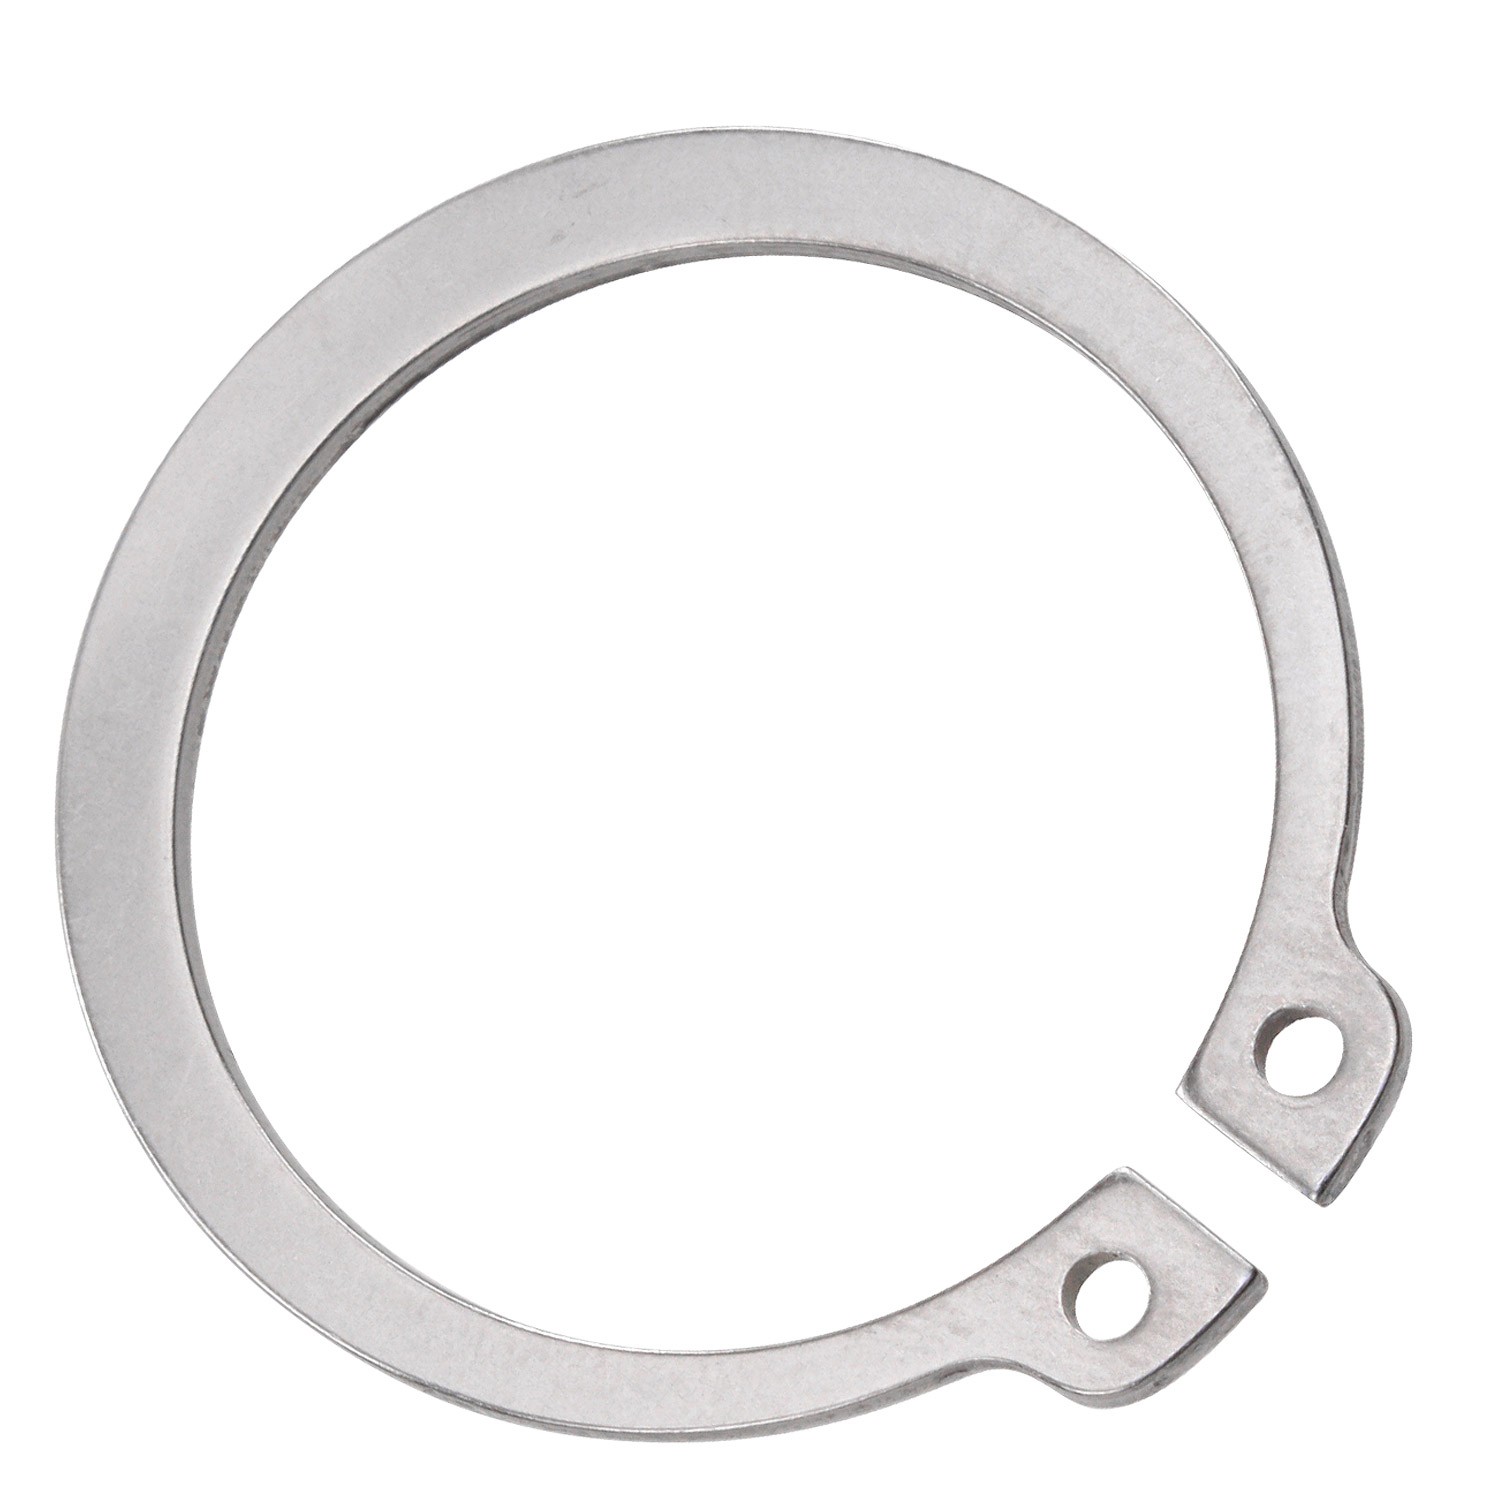 Кольцо стопорное наружное 13х1 DIN 471, нержавеющая сталь A4 - фото